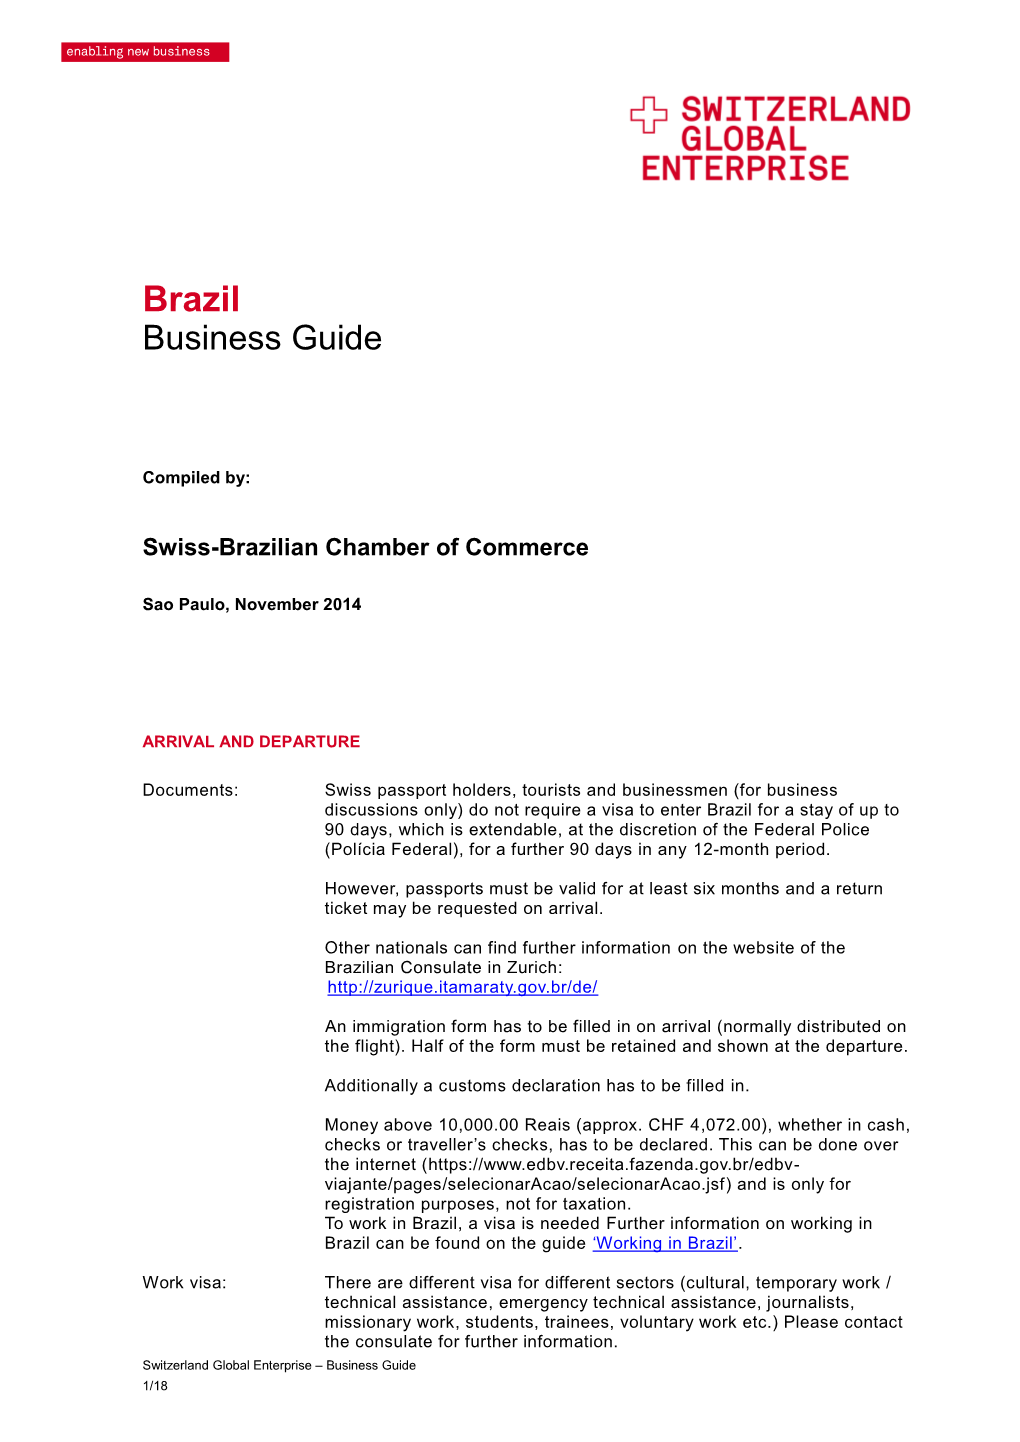 Brazil Business Guide